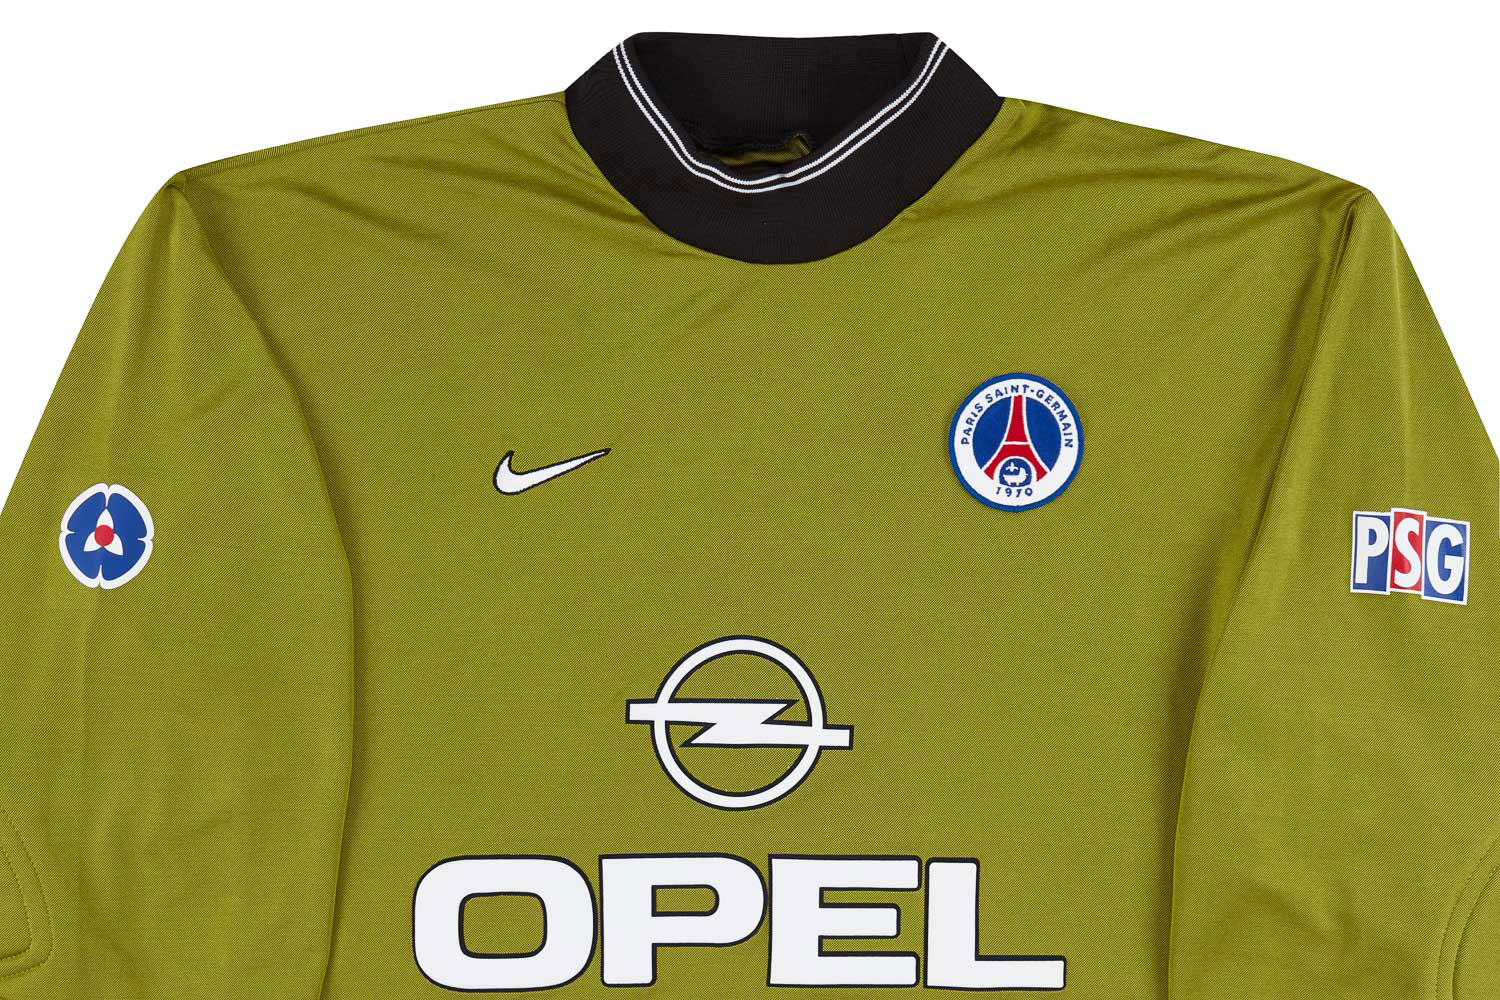 Maillot Nike football PSG Paris Saint Germain Vintage 2006/07 - XL